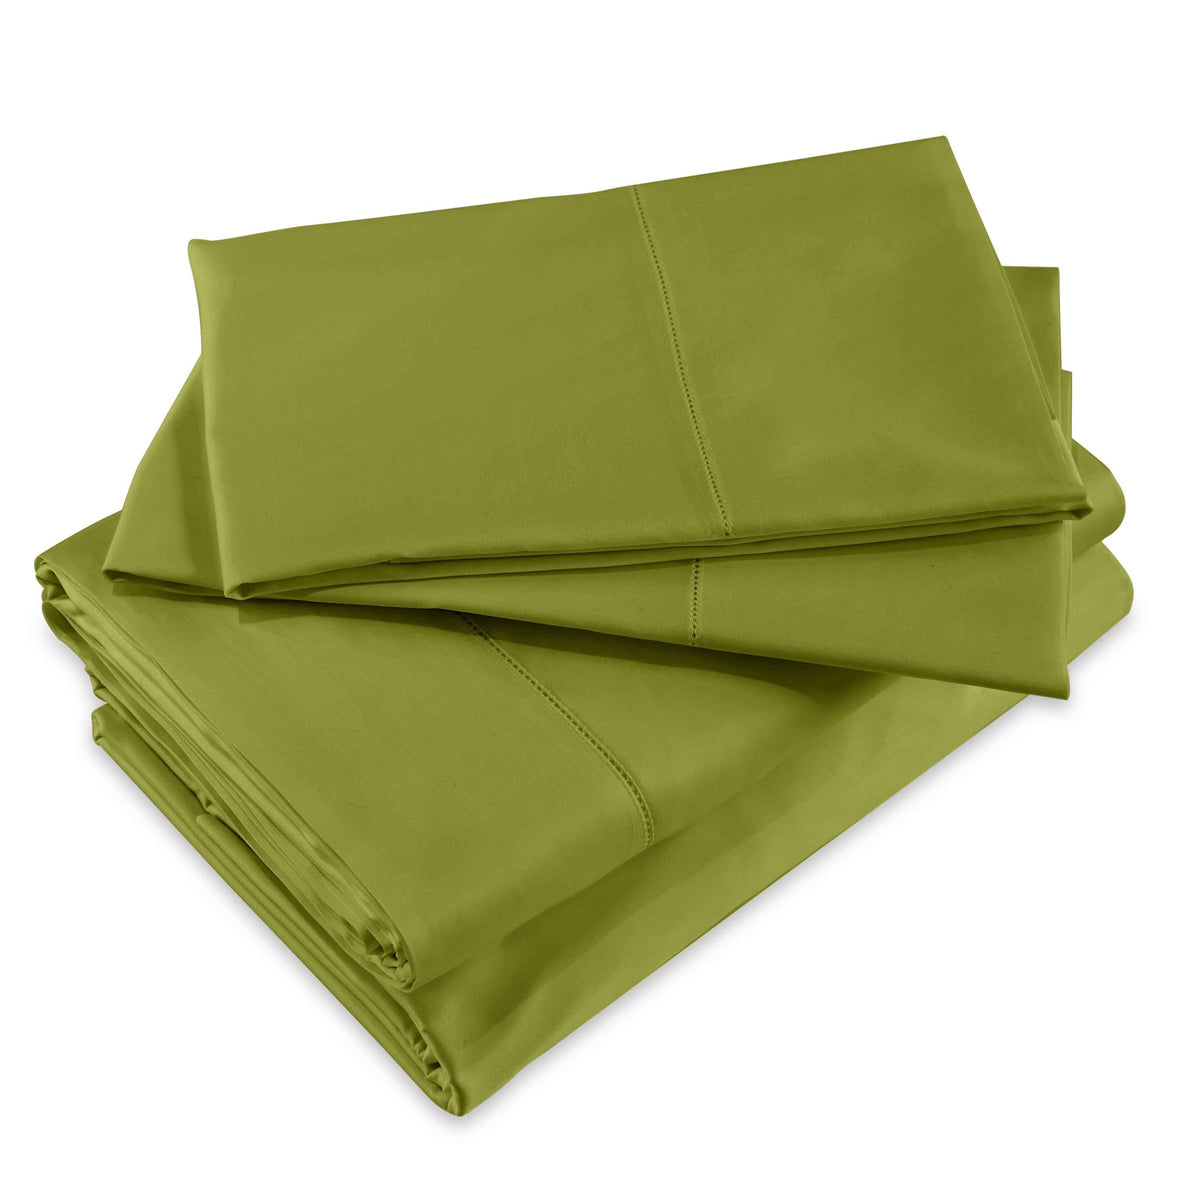 Clear Image of Signoria Raffaello Sheet Set in Moss Green Color